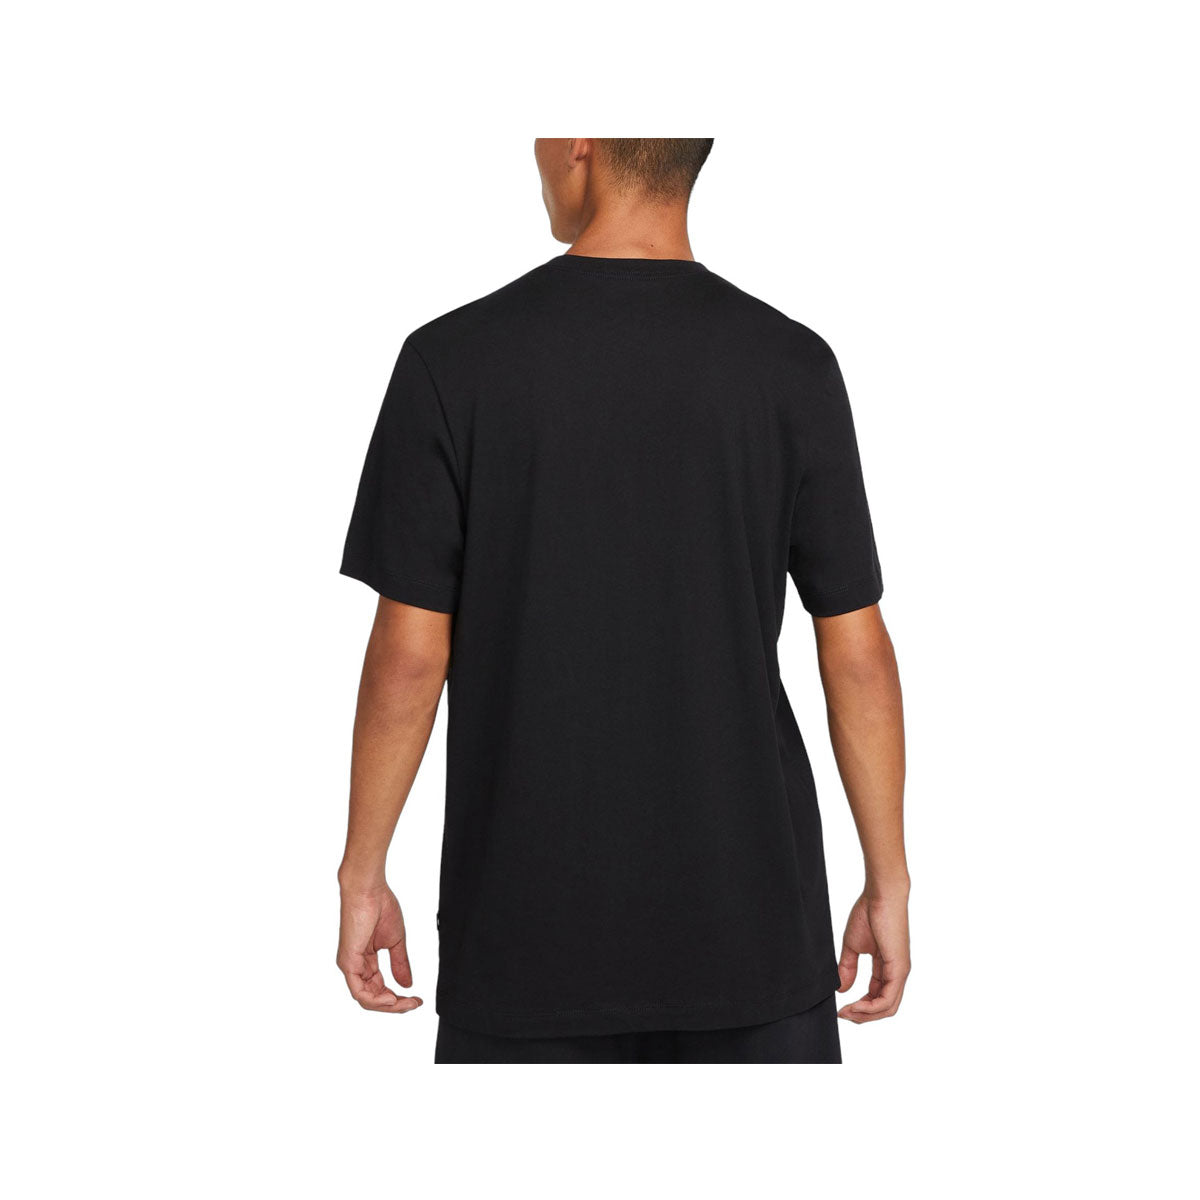 Nike Men's Sportswear Moving Co. T-Shirt Black